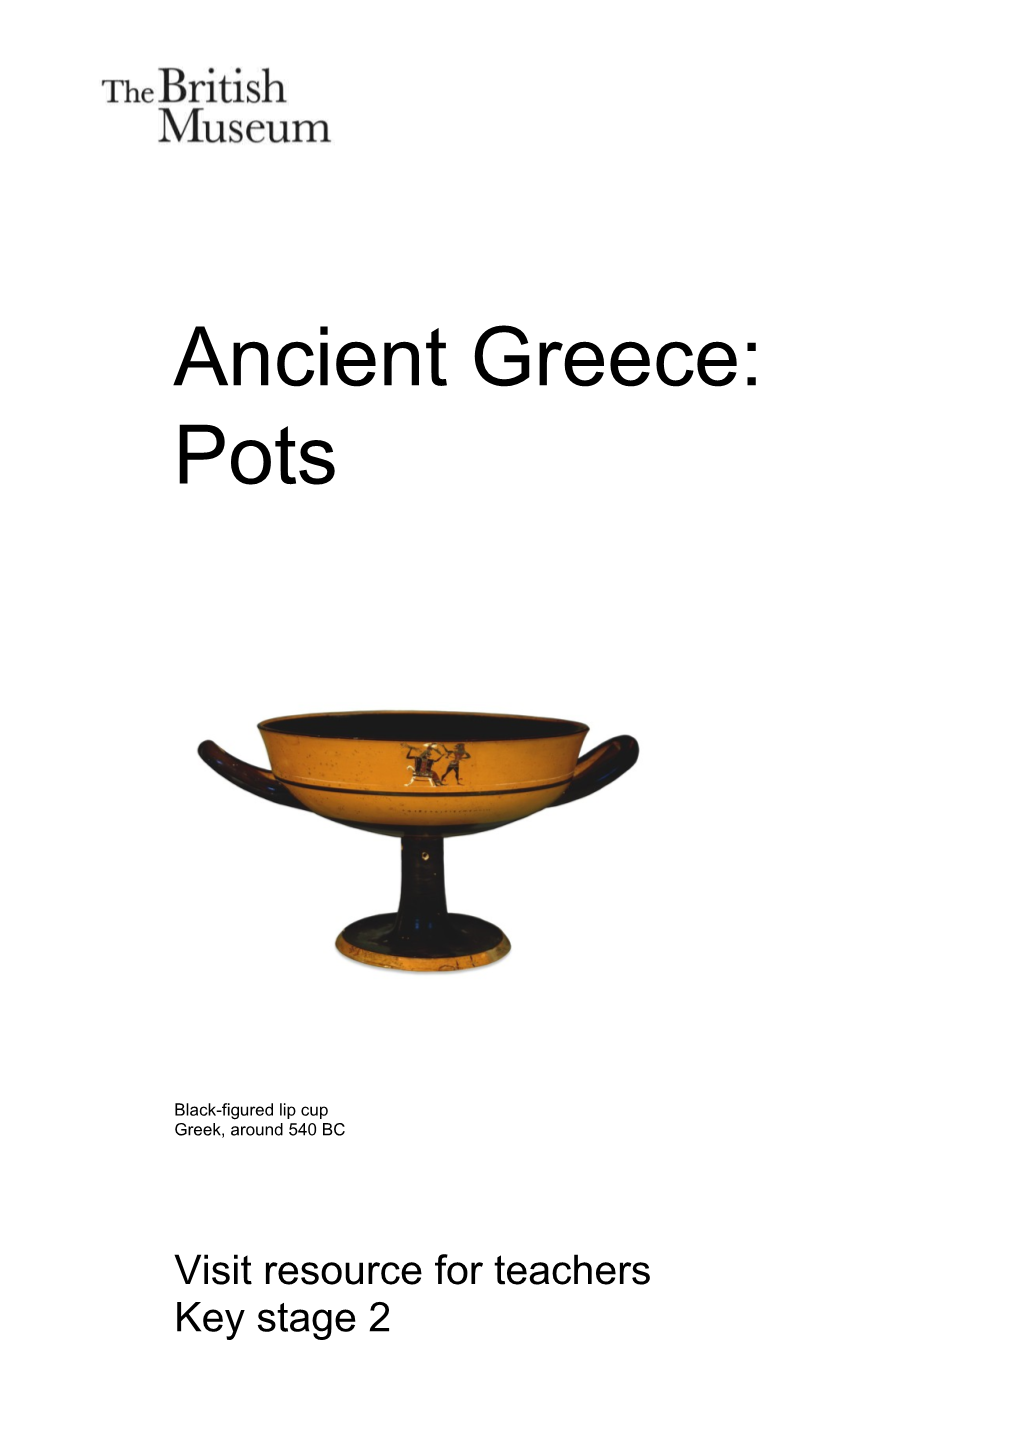 Ancient Greece: Pots Before Your Visit